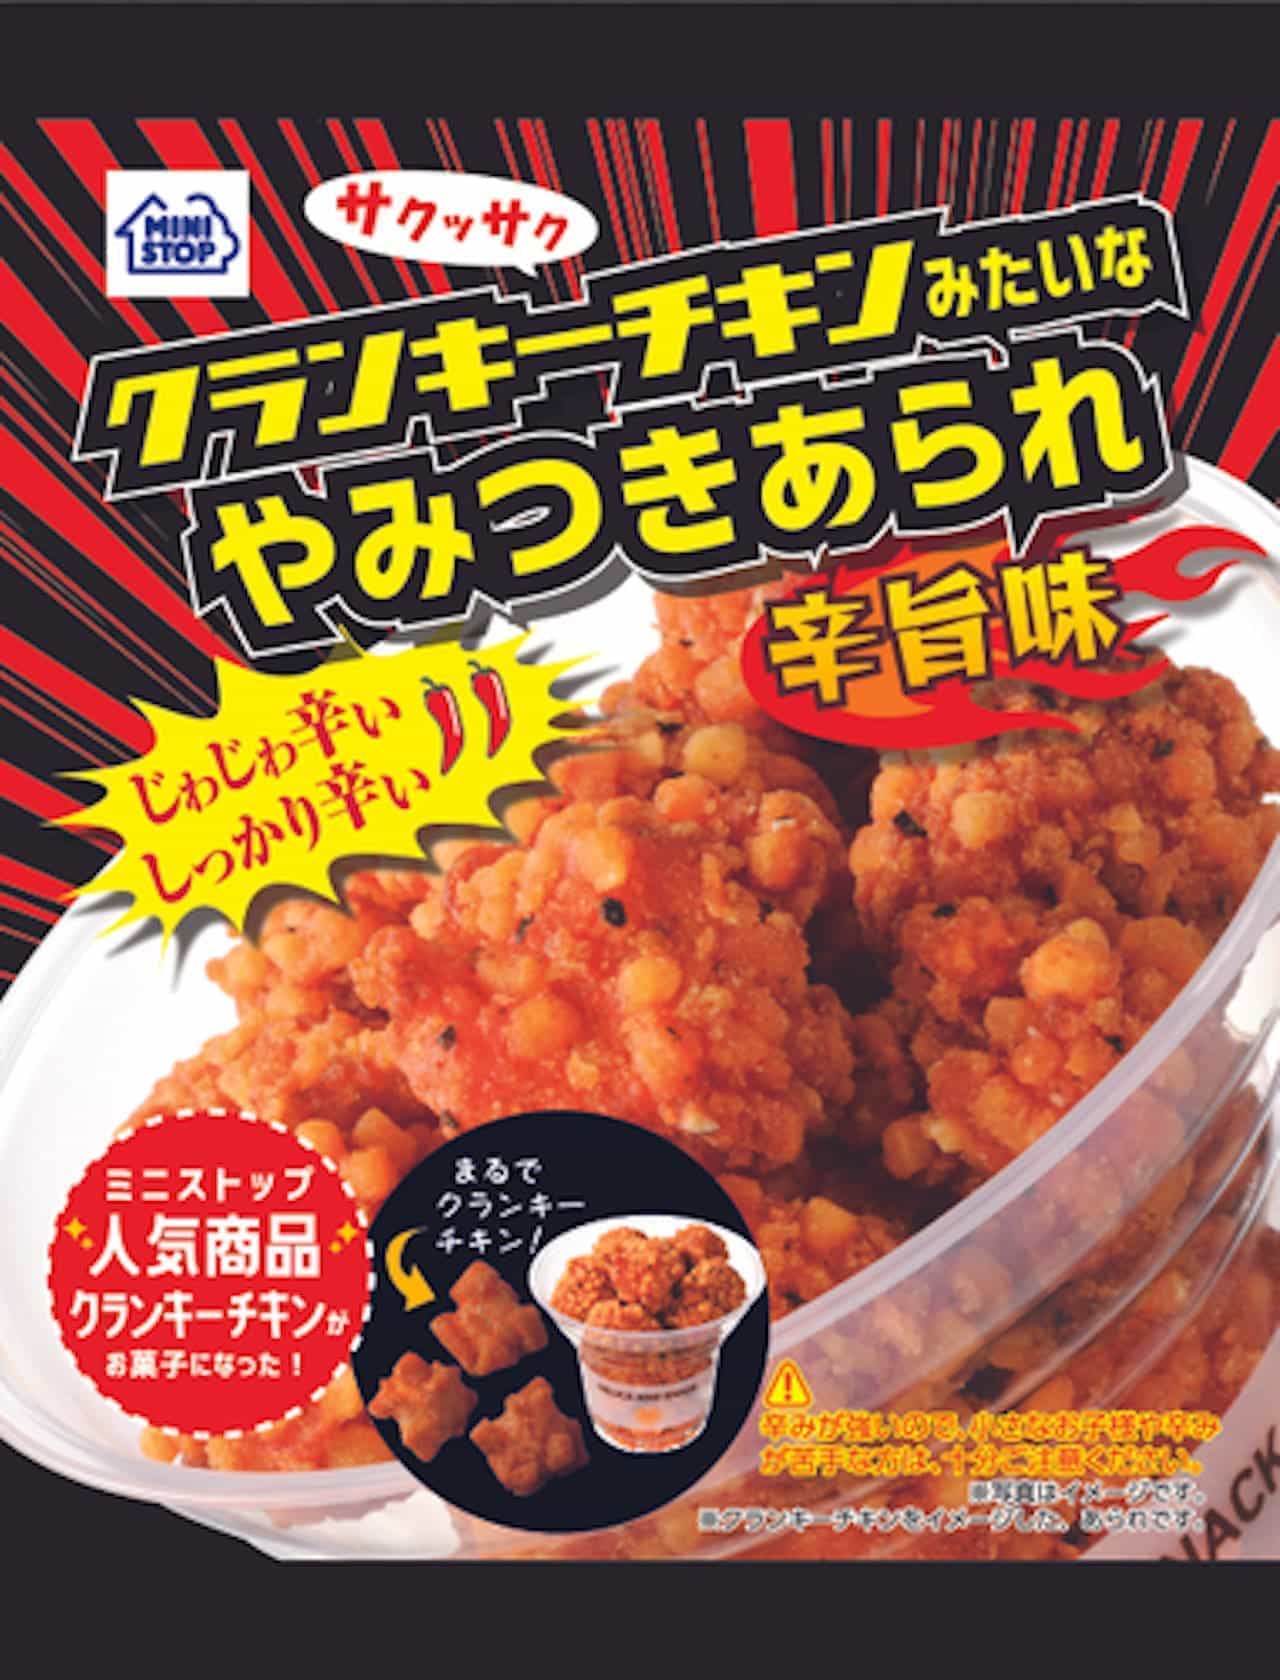 Ministop "Crunchy Chicken-like Yamitsuki Arare Spicy Umami